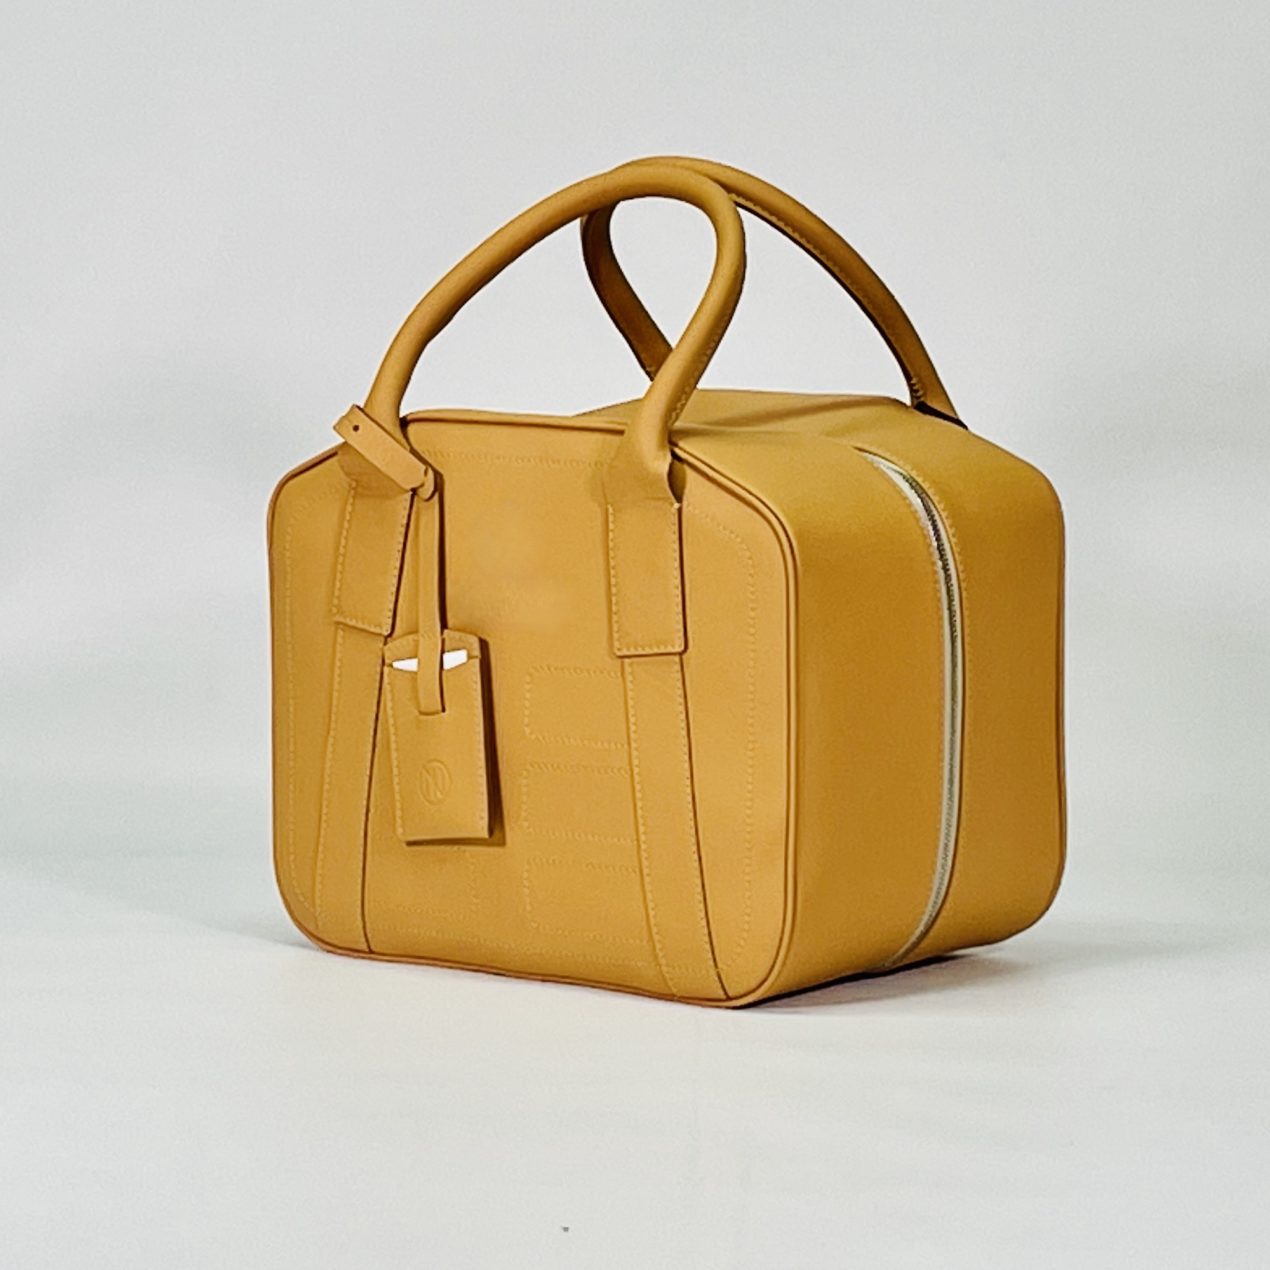 599 GTB suitcase measure bespoke luggage Leather Beige 4208 Beige + Alcantara Schedoni